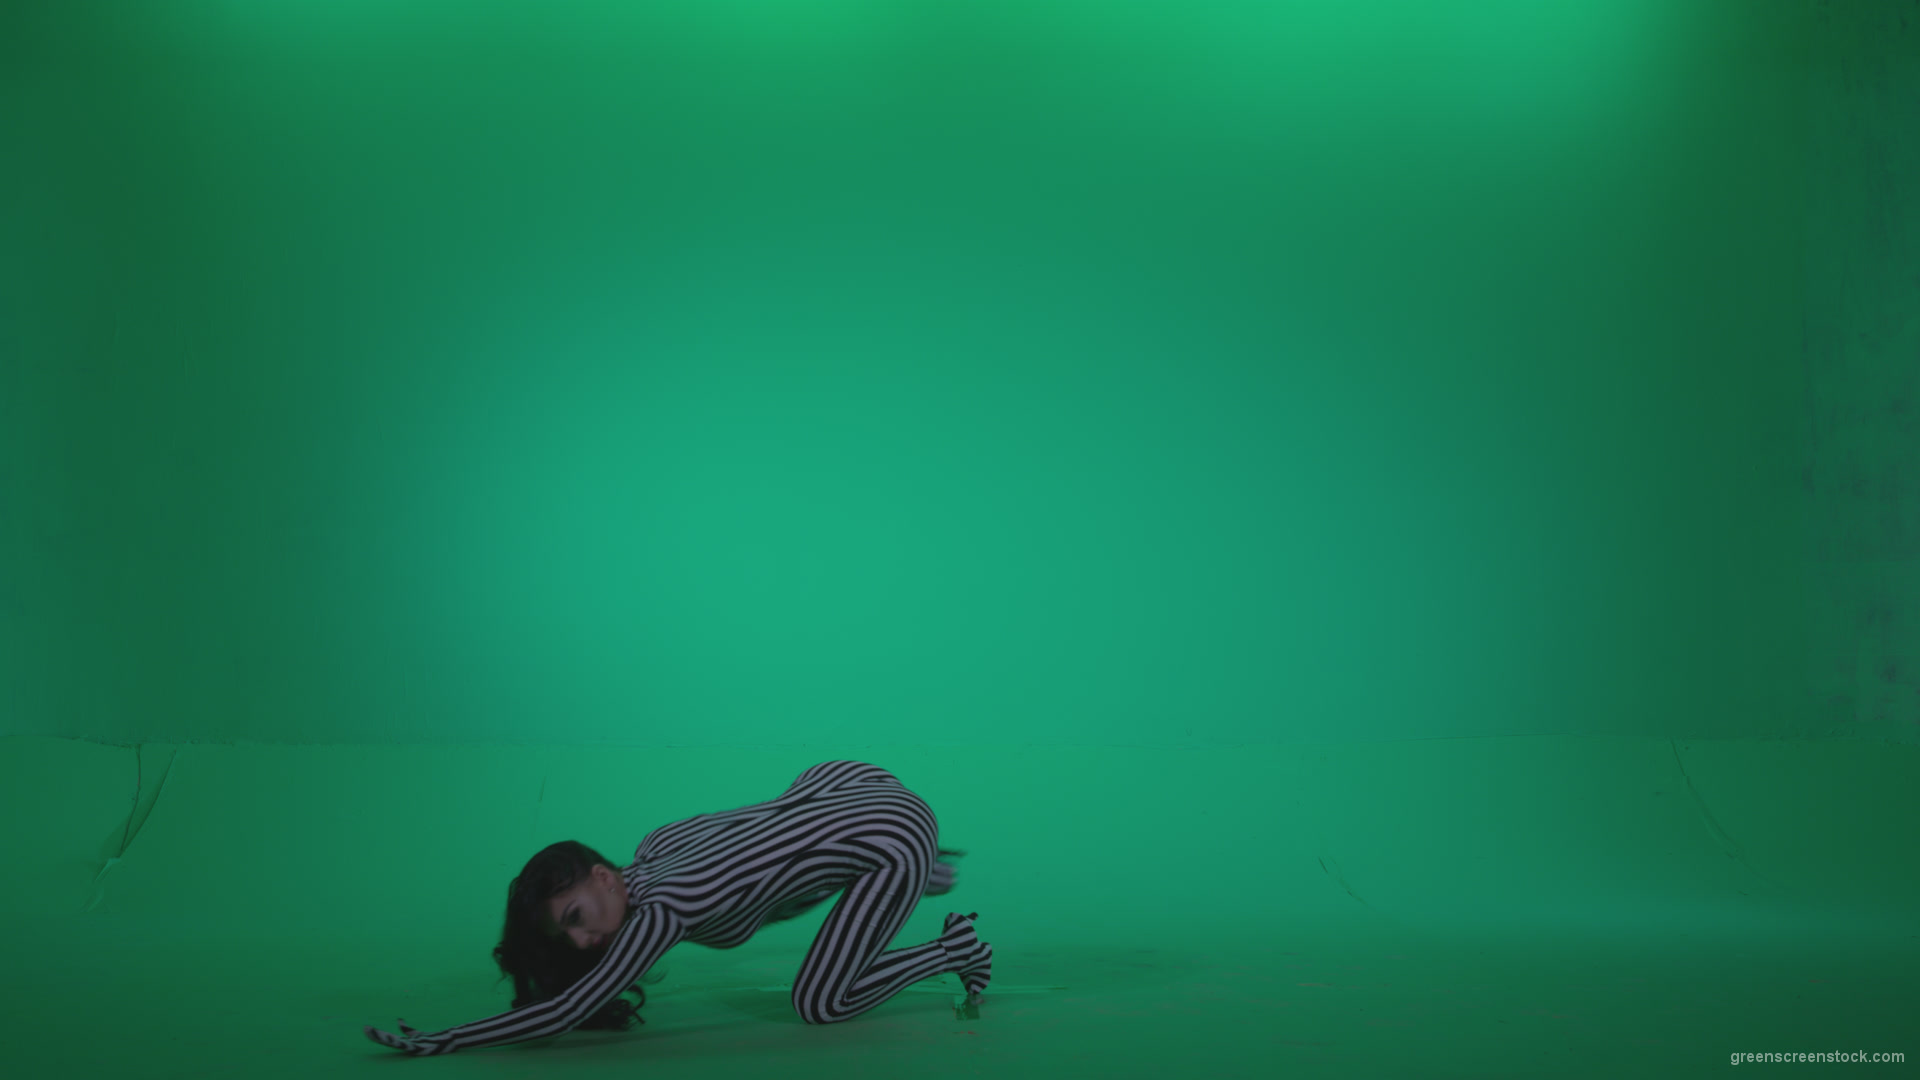 Go-go-Dancer-White-Stripes-s3-Green-Screen-Video-Footage_005 Green Screen Stock